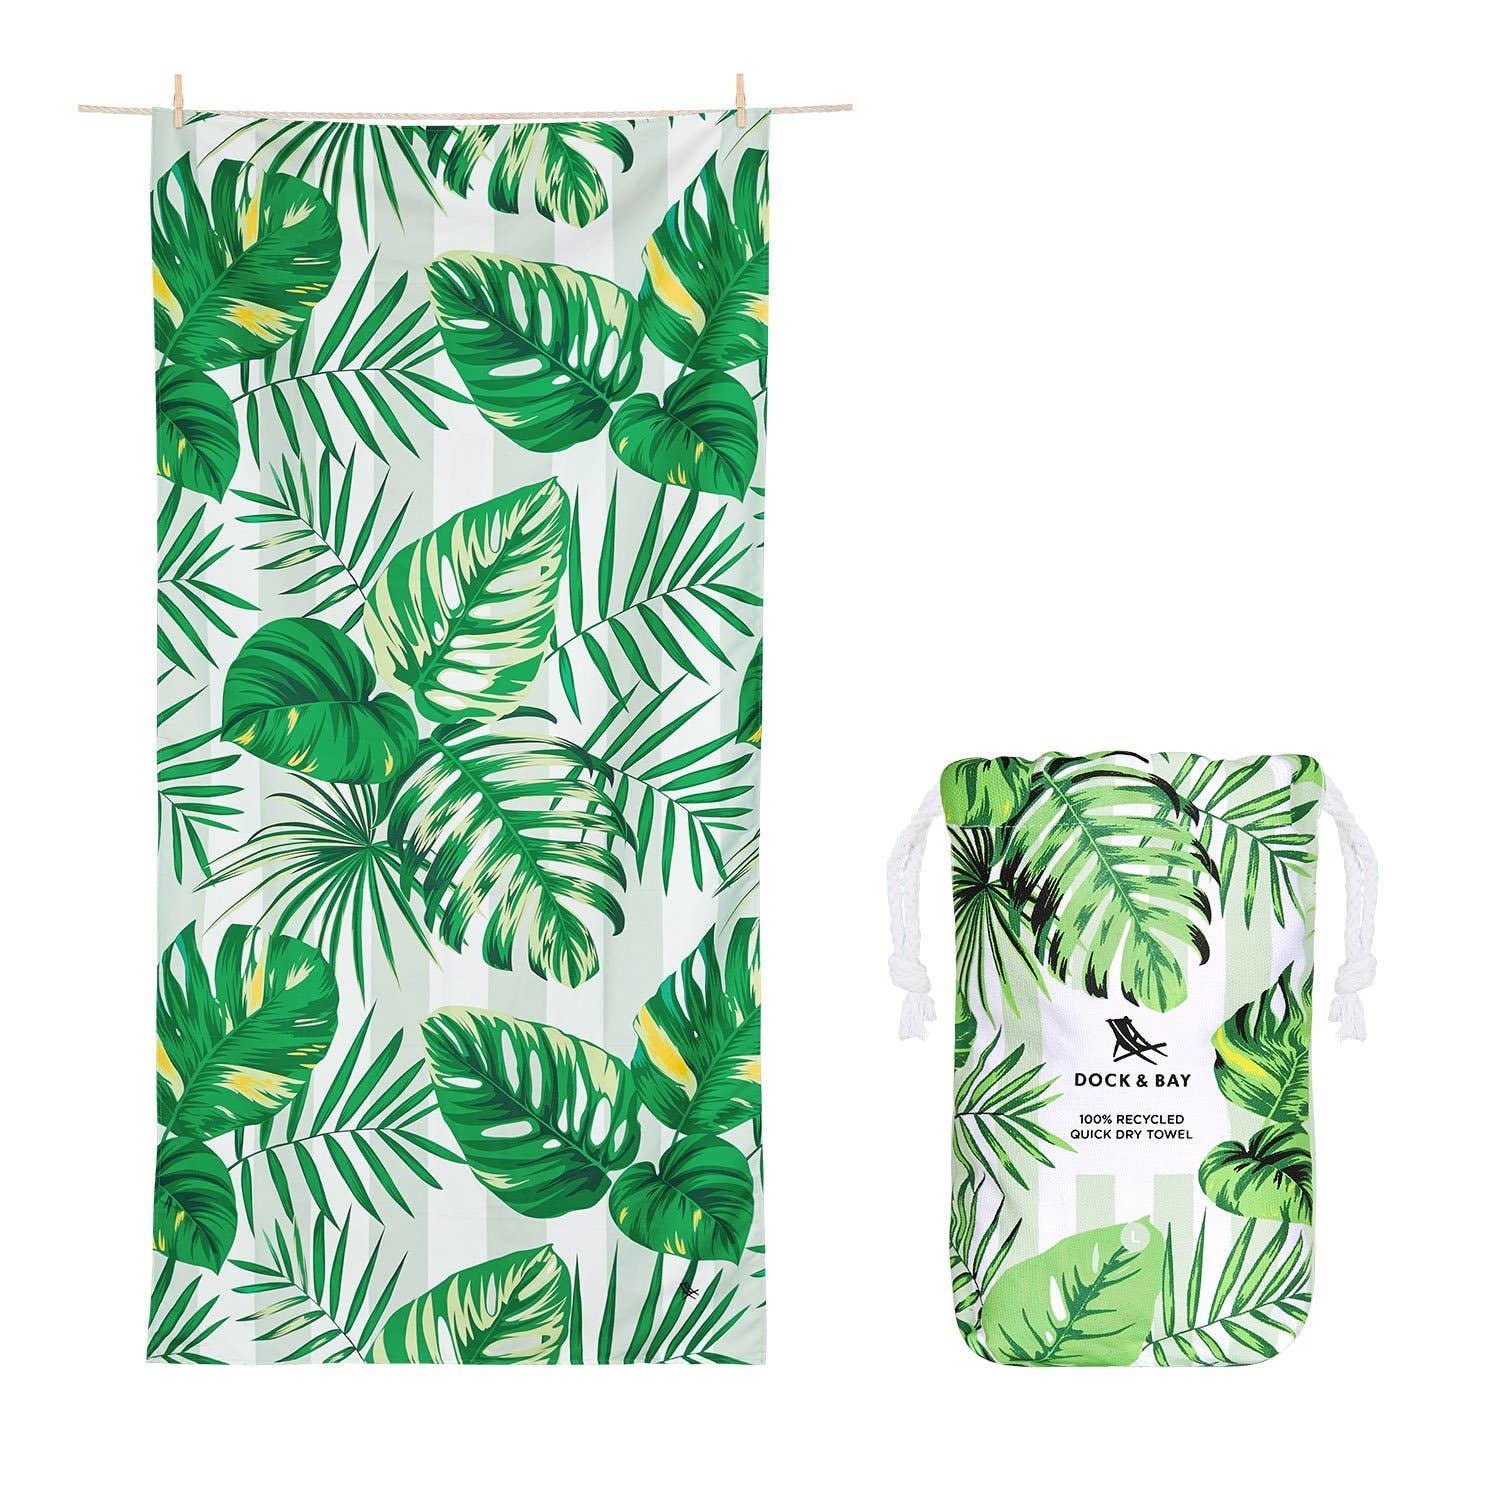 Dock & Bay USA Extra Large Quick Dry Towel - Botanical Palm Dreams